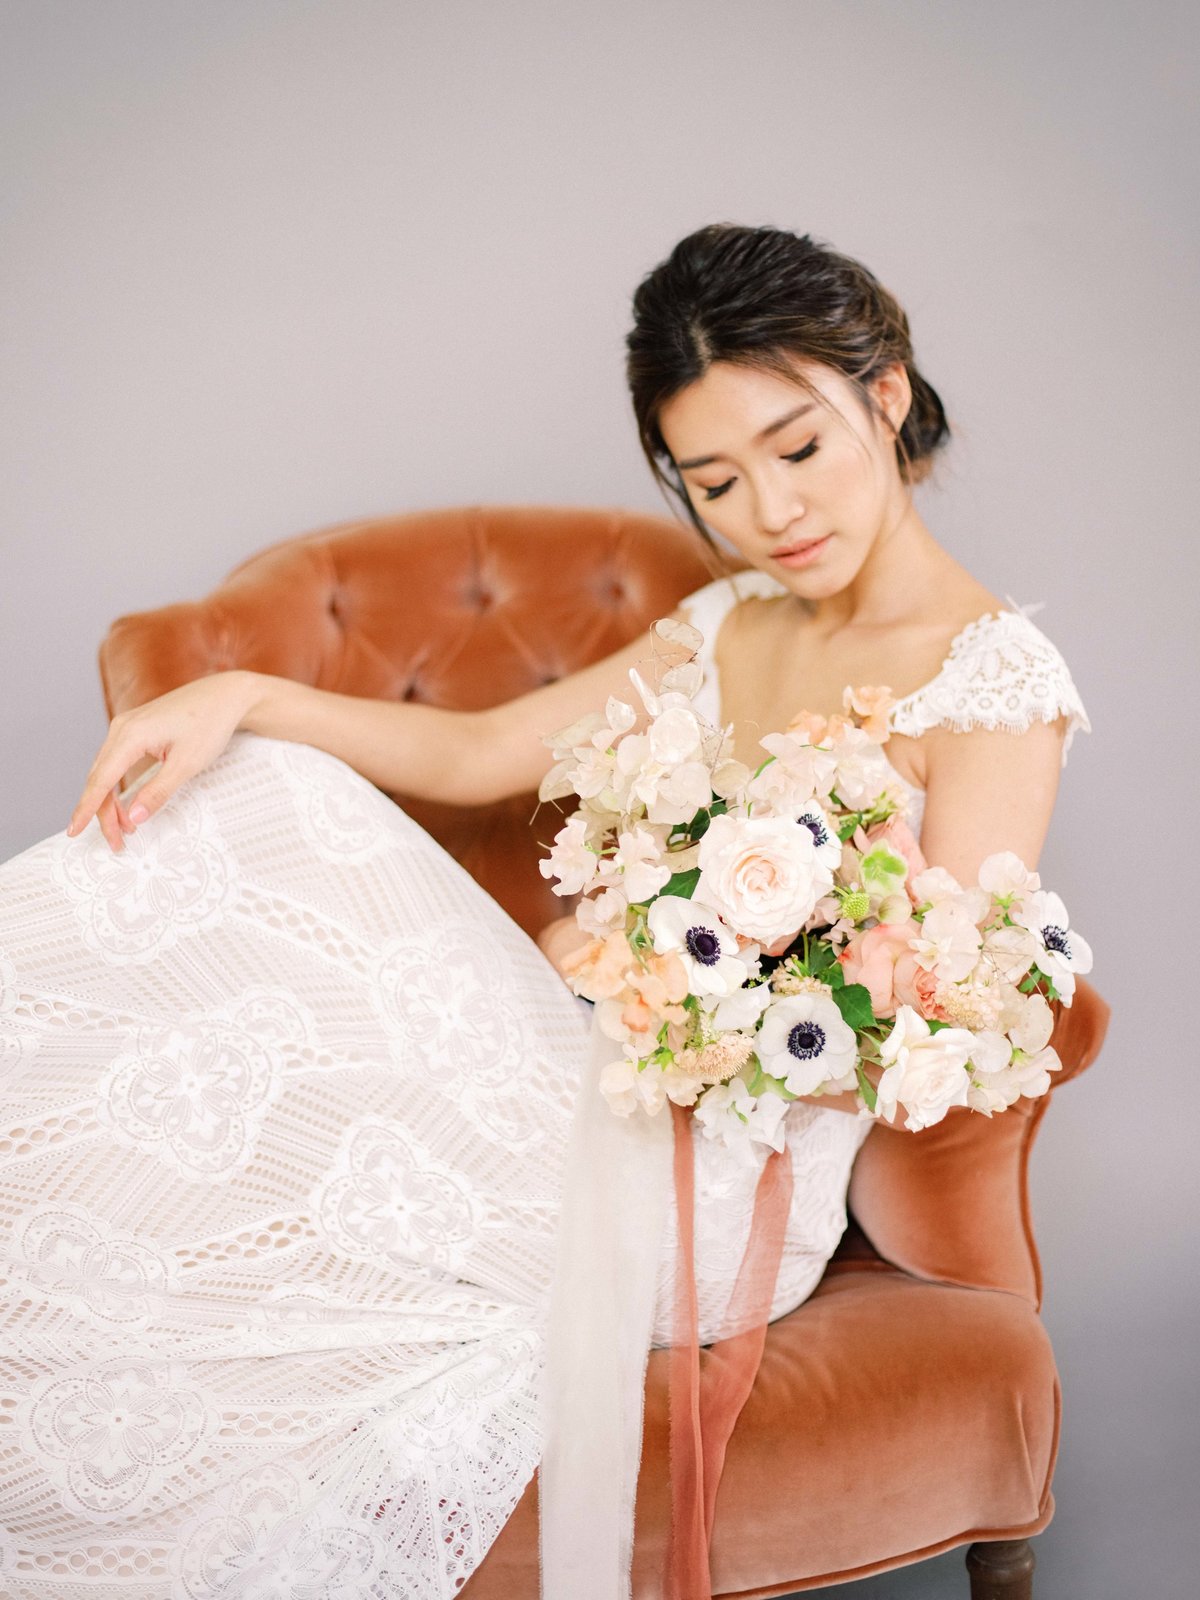 Babsie-Ly-Photography-Style-Me-Pretty-San-Diego-California-Film-Wedding-Photographer-Claire-Pettibone-Dress-Asian-Bride-023